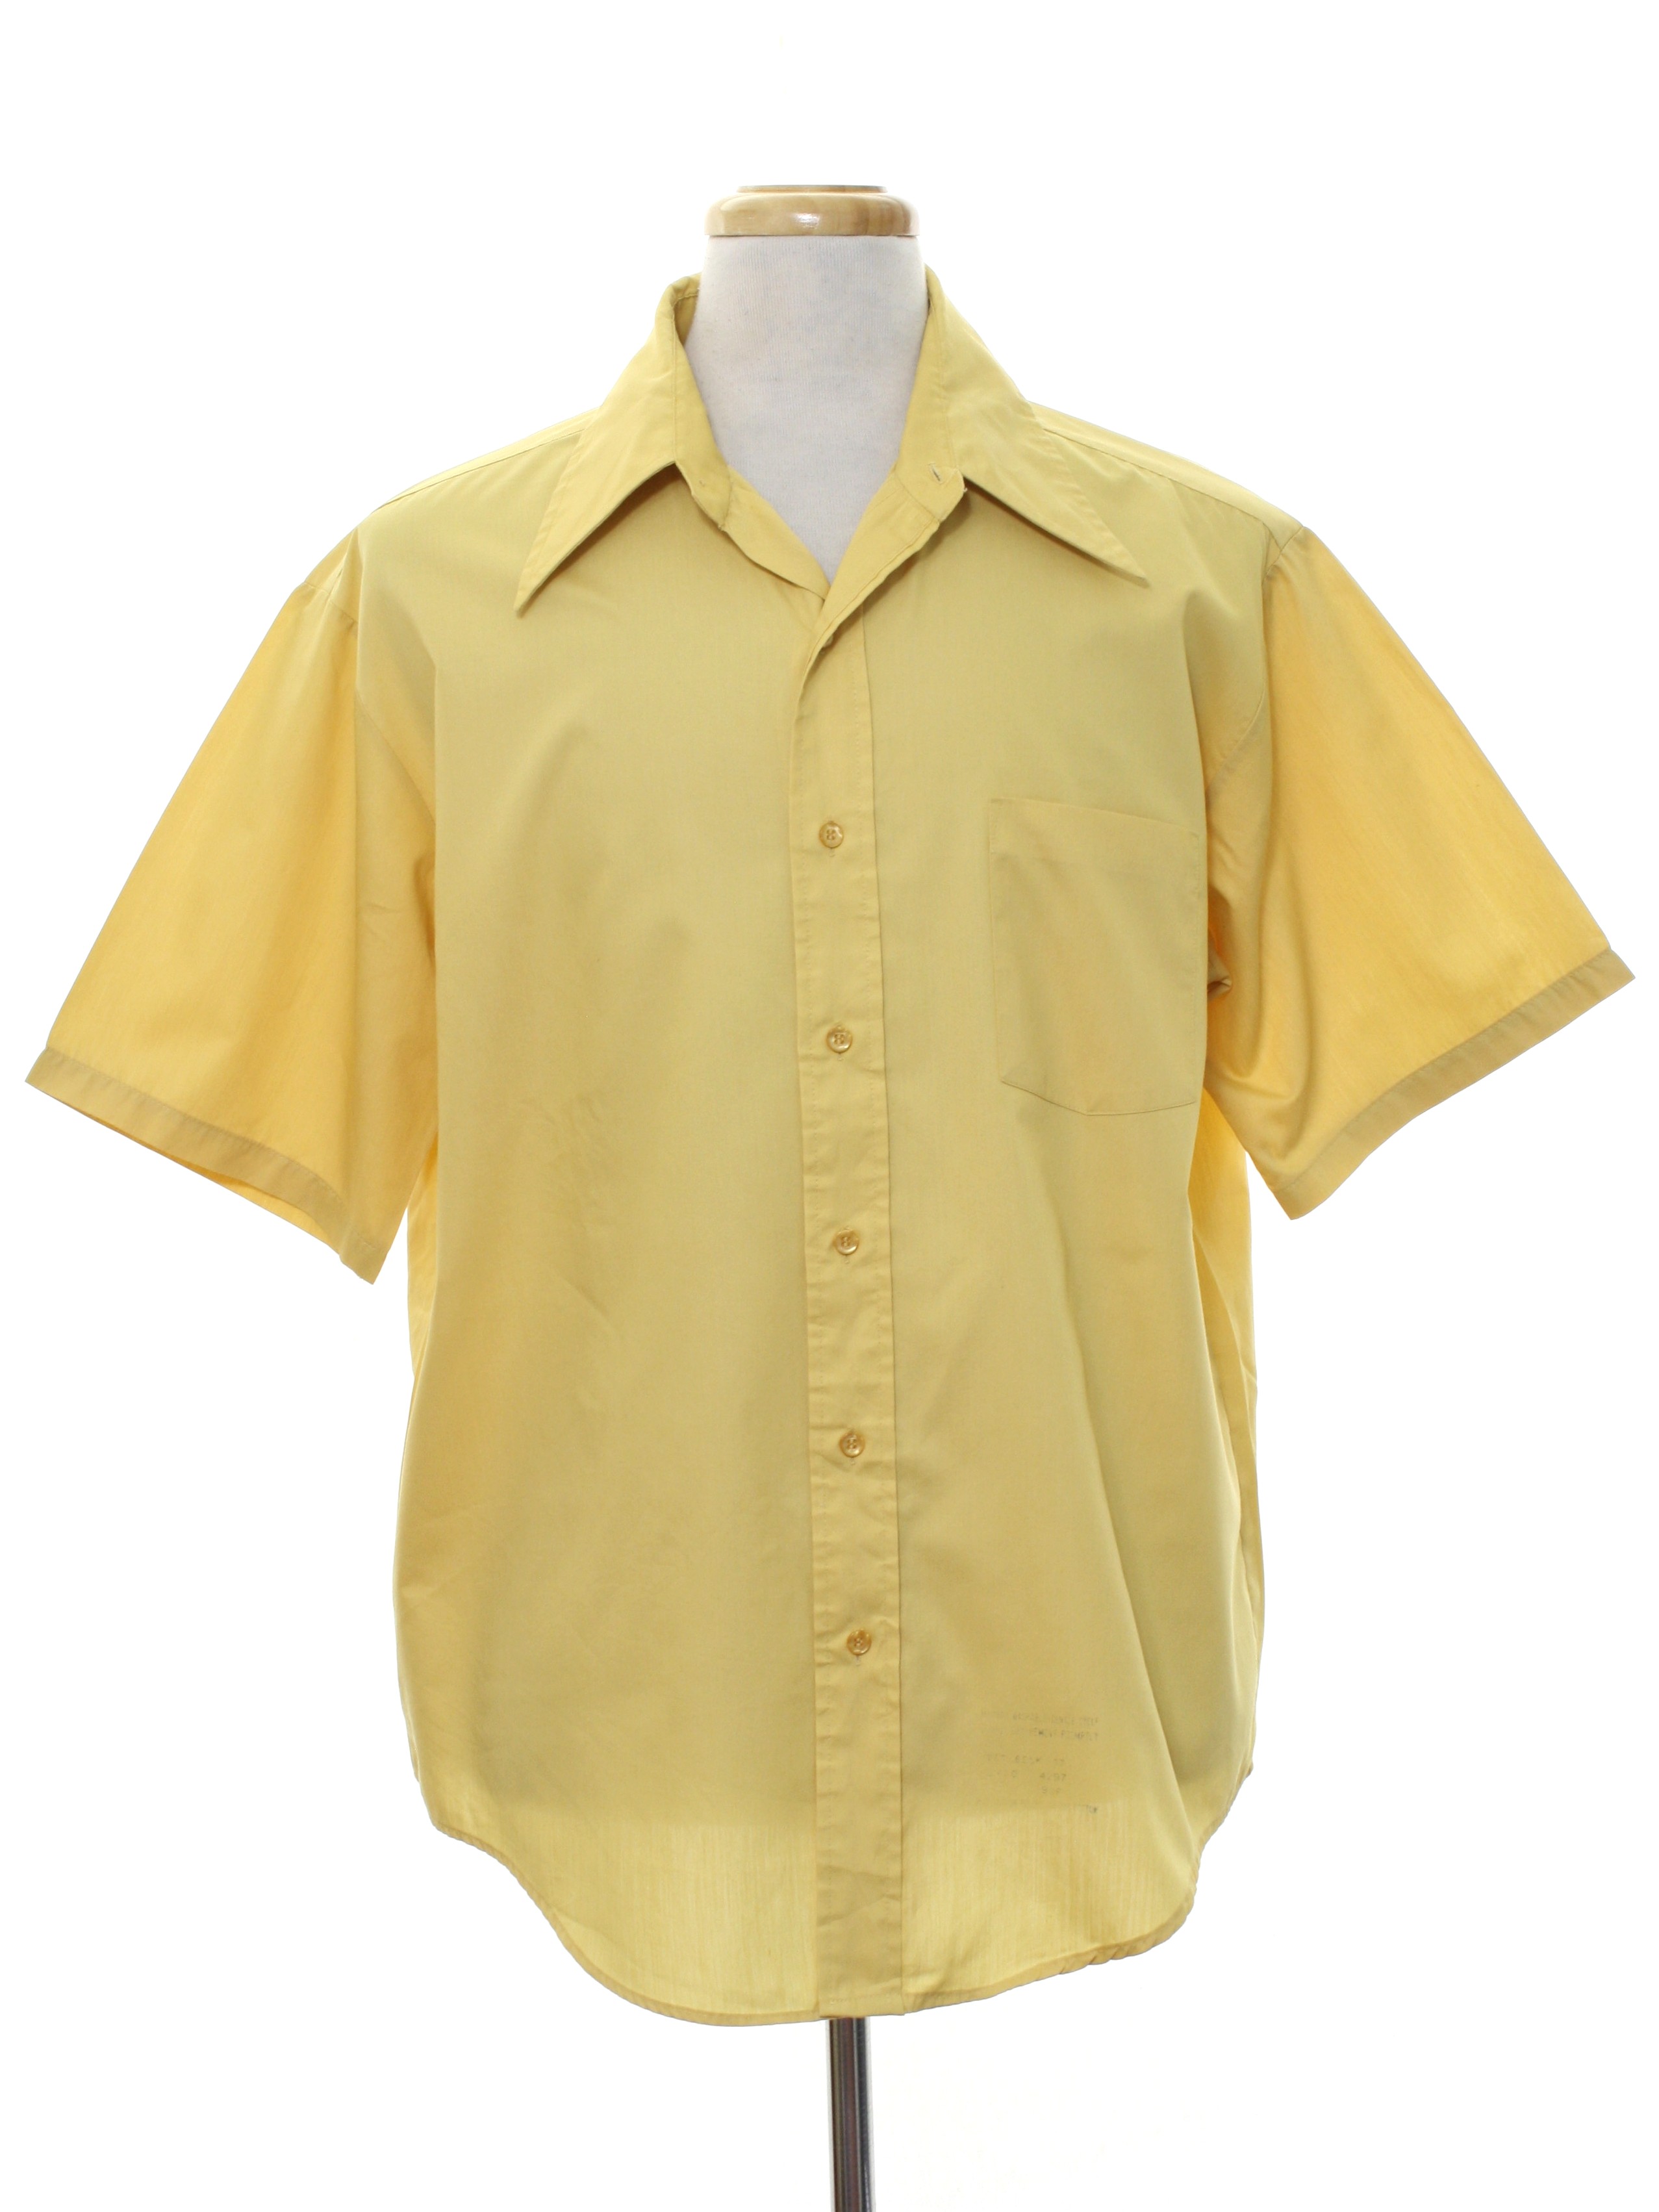 Towncraft 1970s Vintage Shirt: 70s -Towncraft- Mens harvest gold